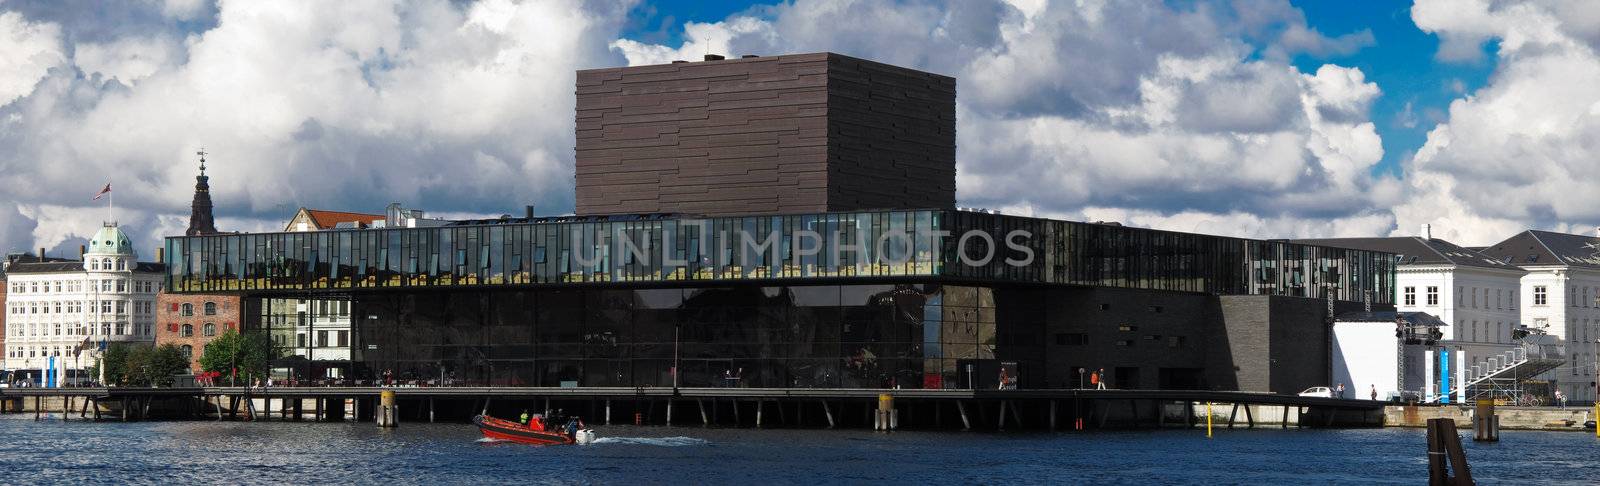 Royal Danish Playhouse, Copenhagen Theatre by Arrxxx